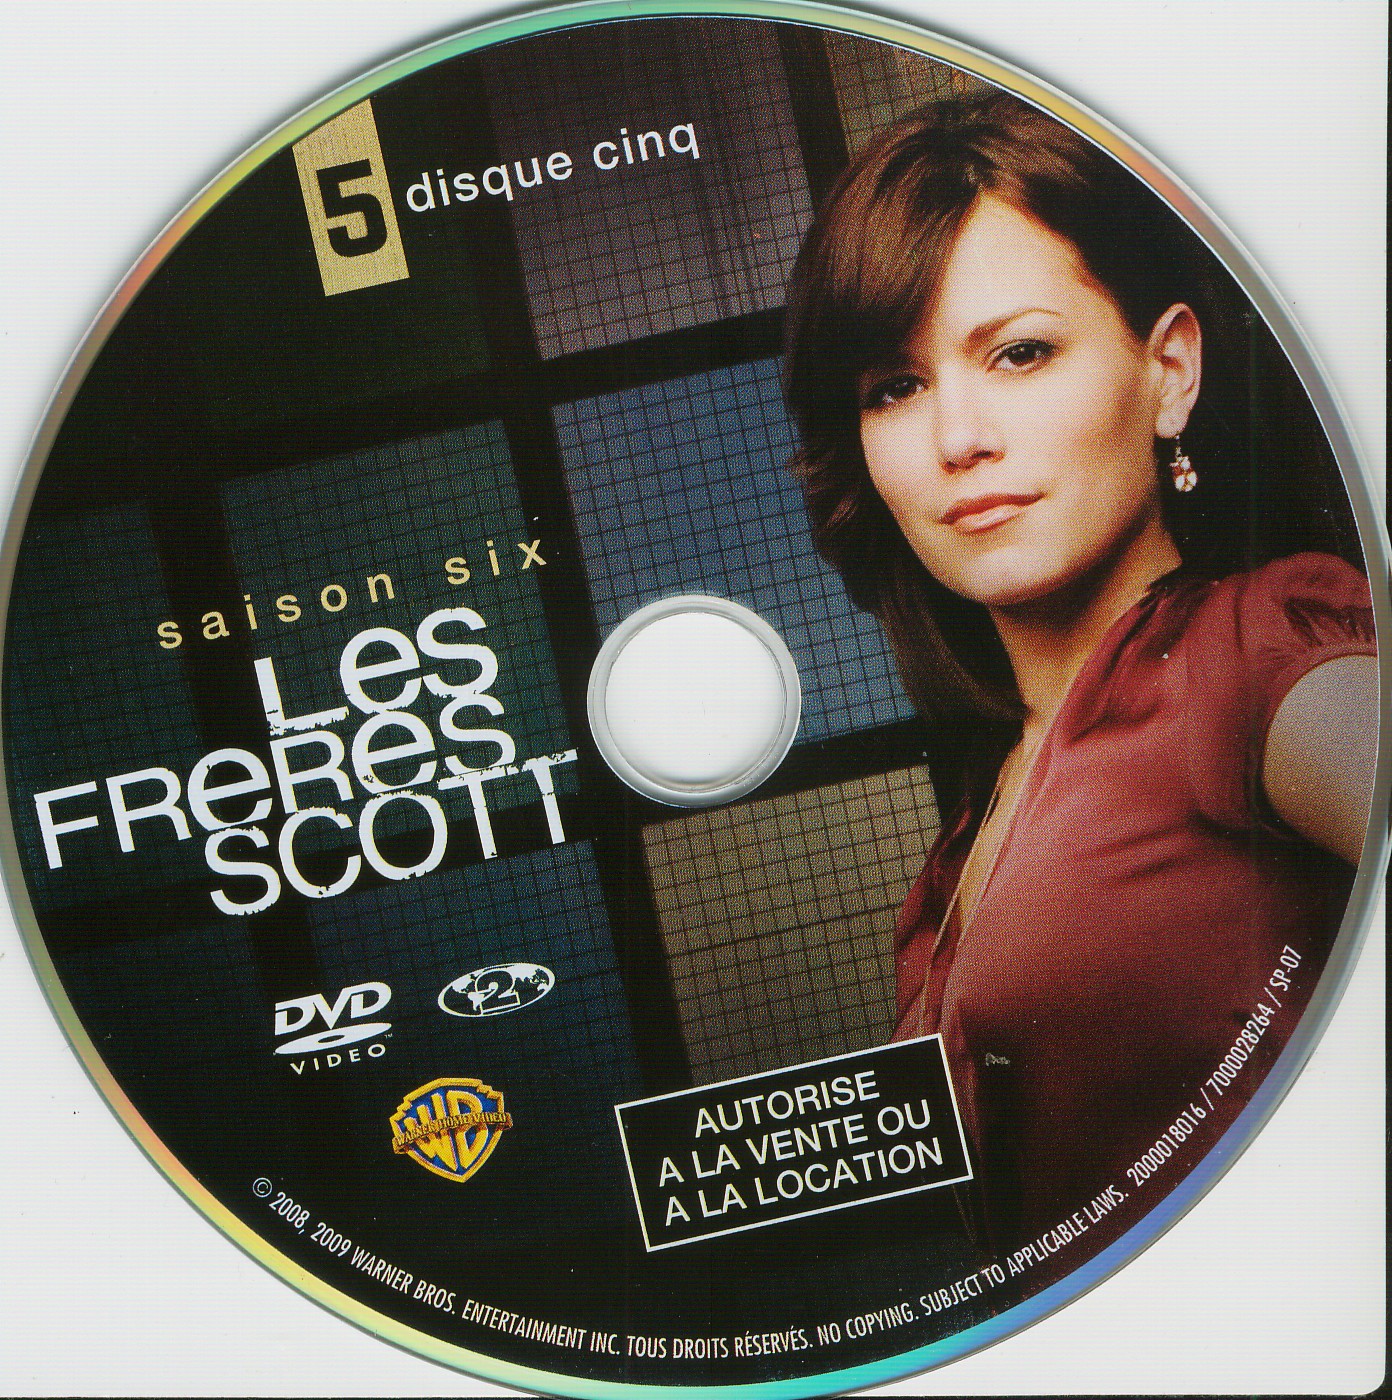 Les freres Scott saison 6 DISC 5